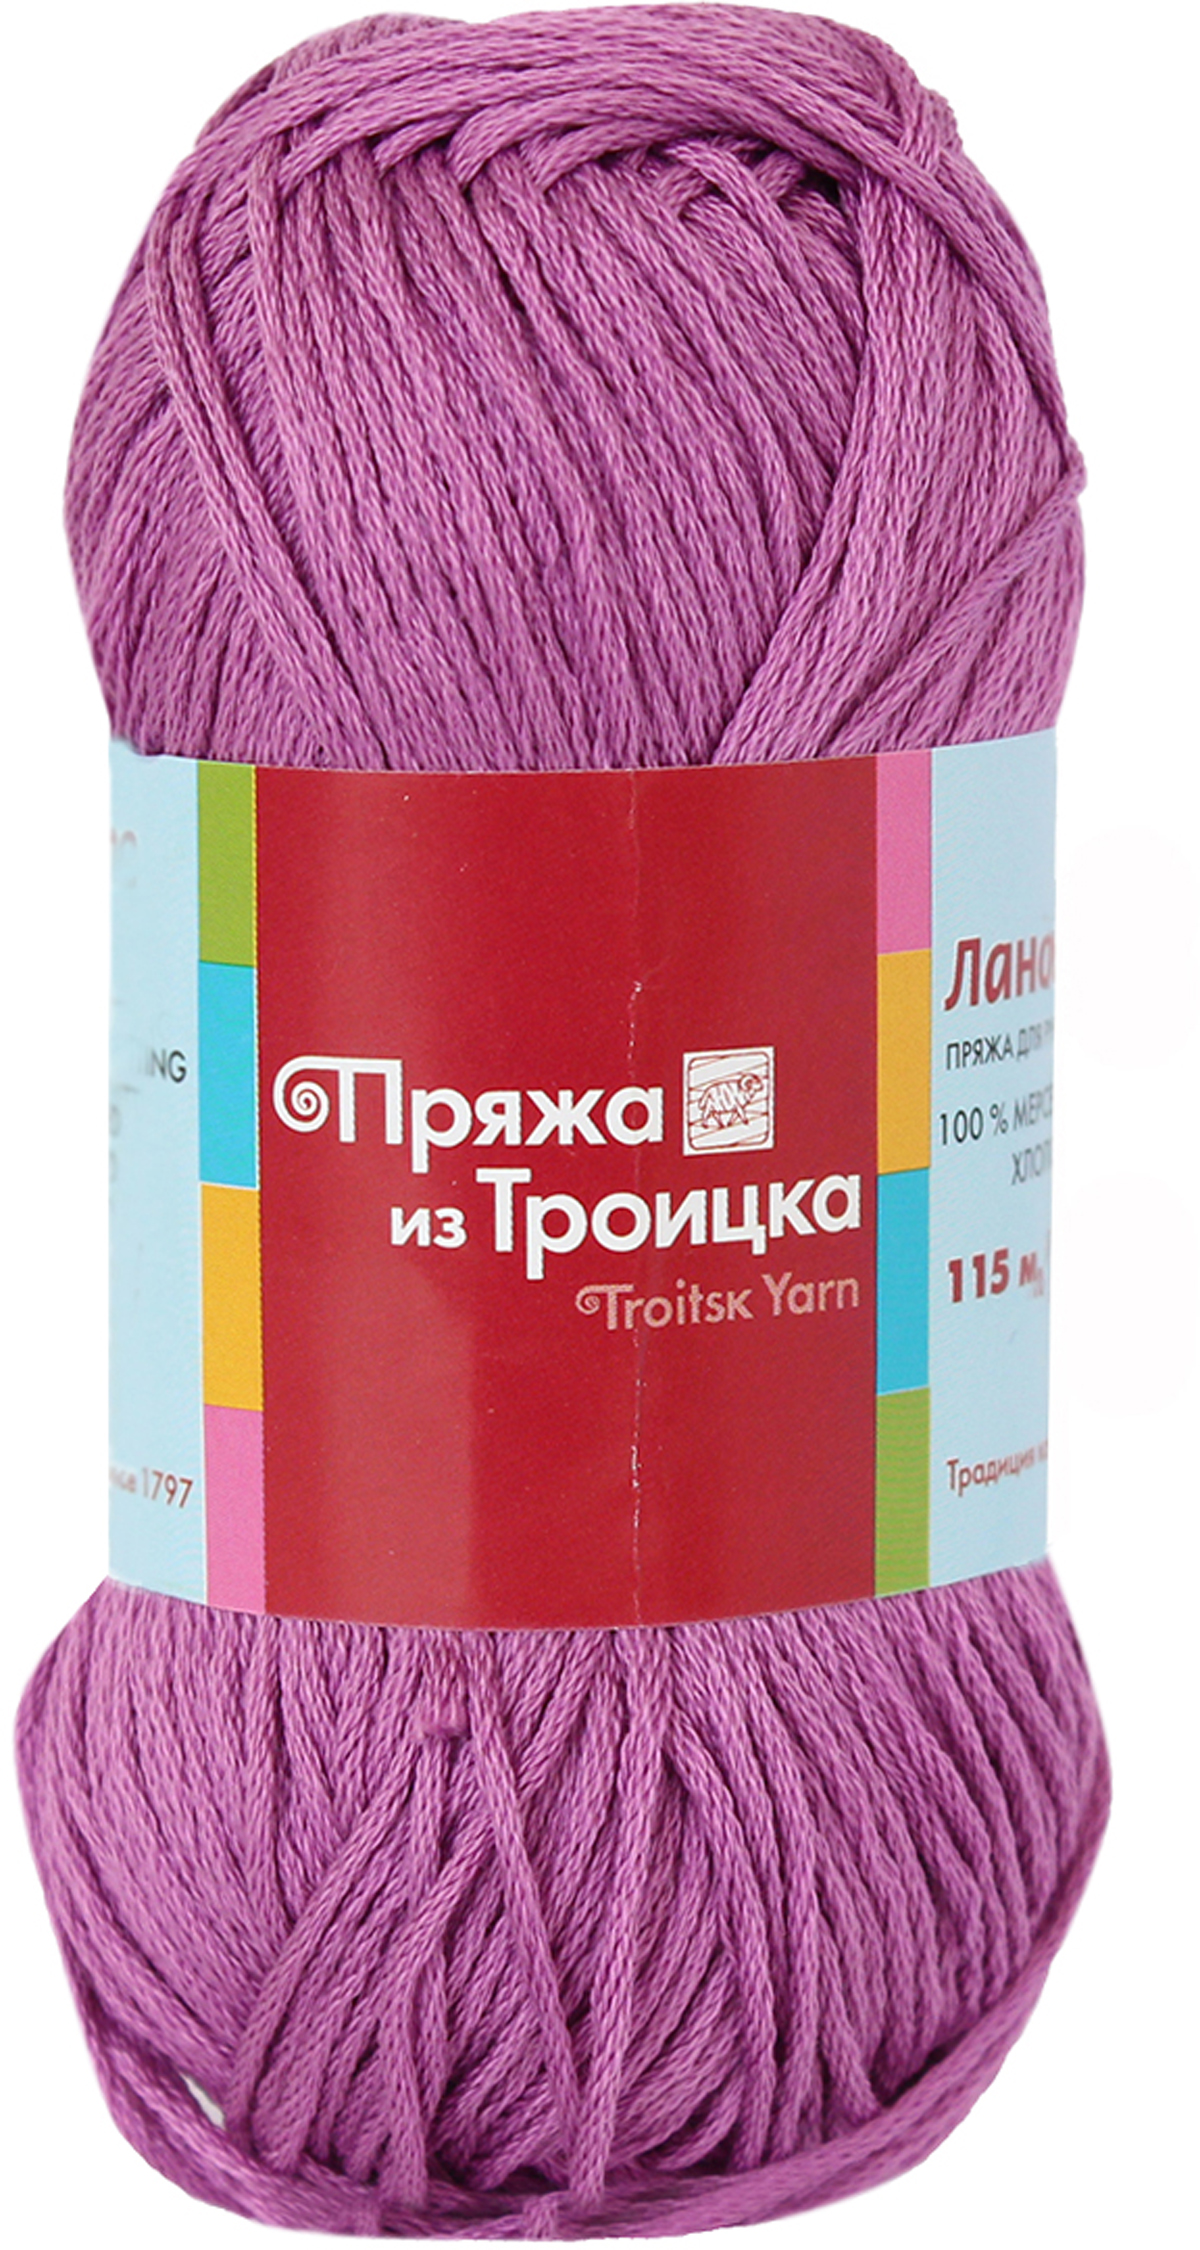 Пряжа для вязания Троицкая камвольная фабрика 